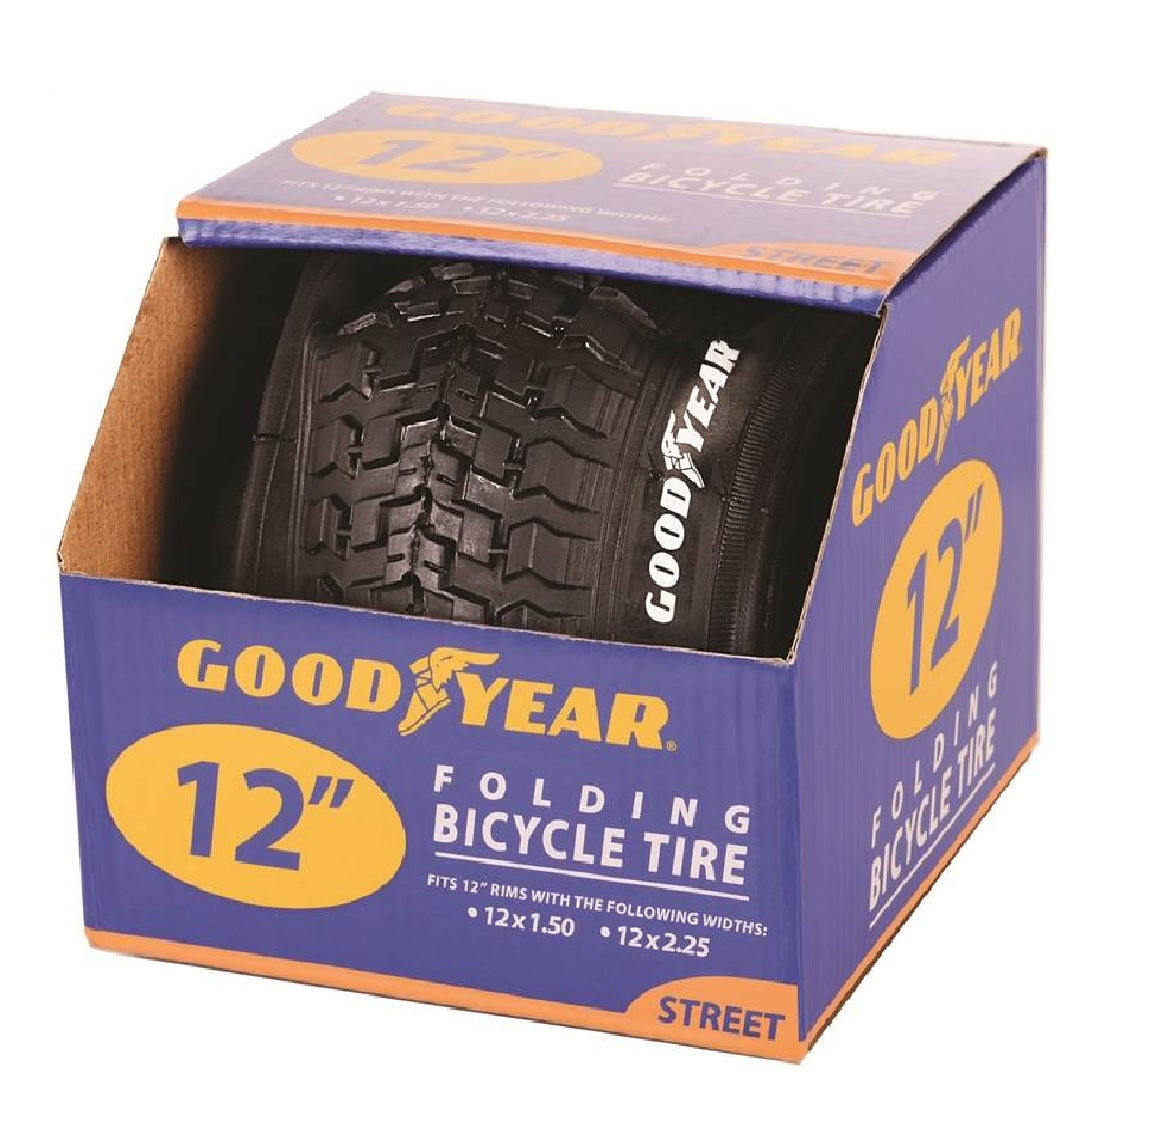 Goodyear 91102 12" Folding Bicycle Tire, Black